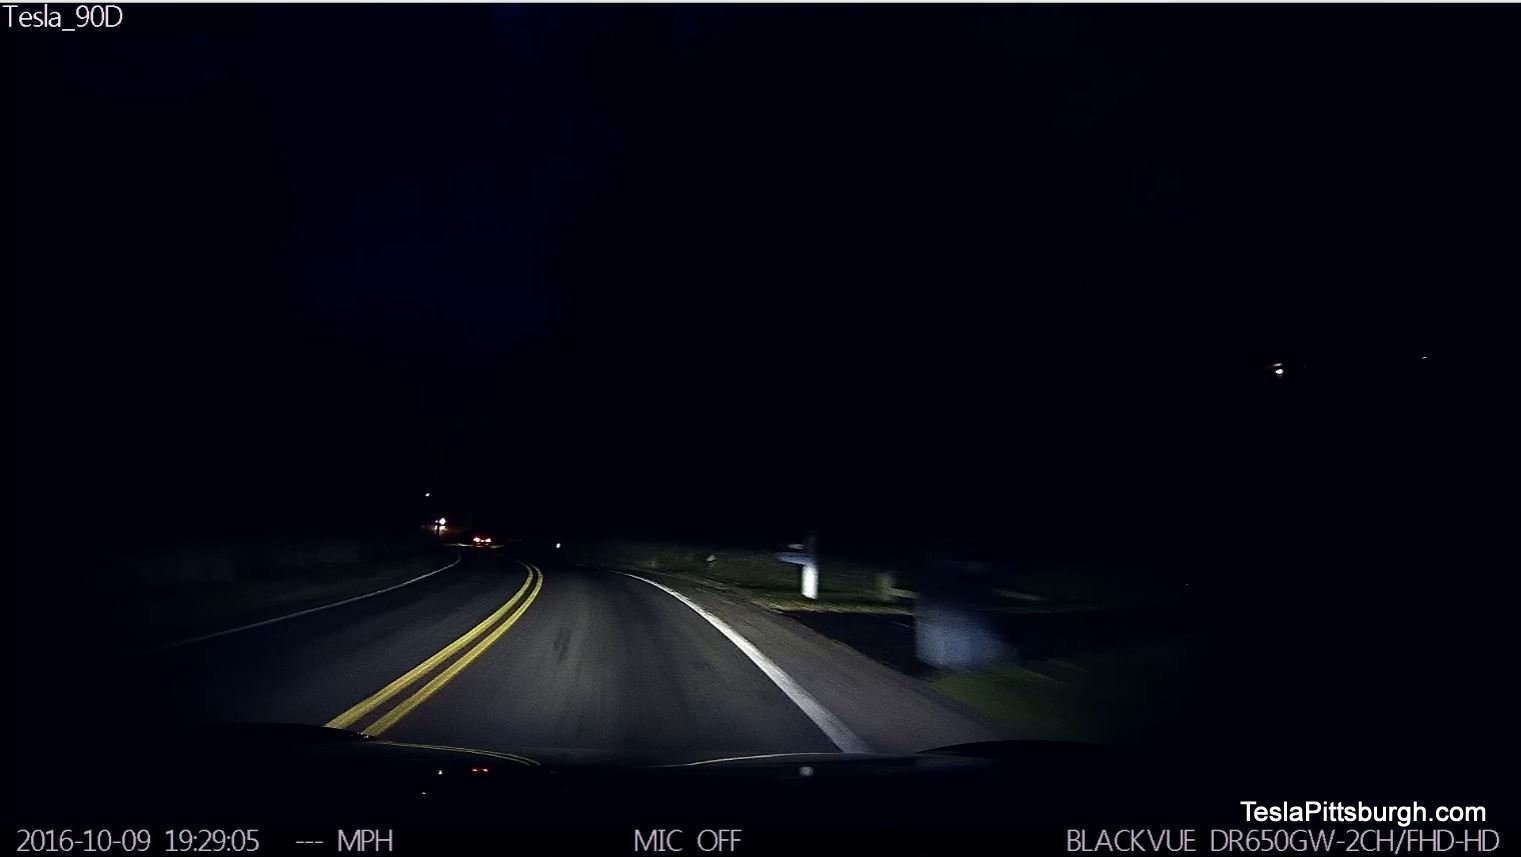 tesla-pittsburgh-dashcam-review-thinkware-f770-camera-mingo-night-driveway-blackvue